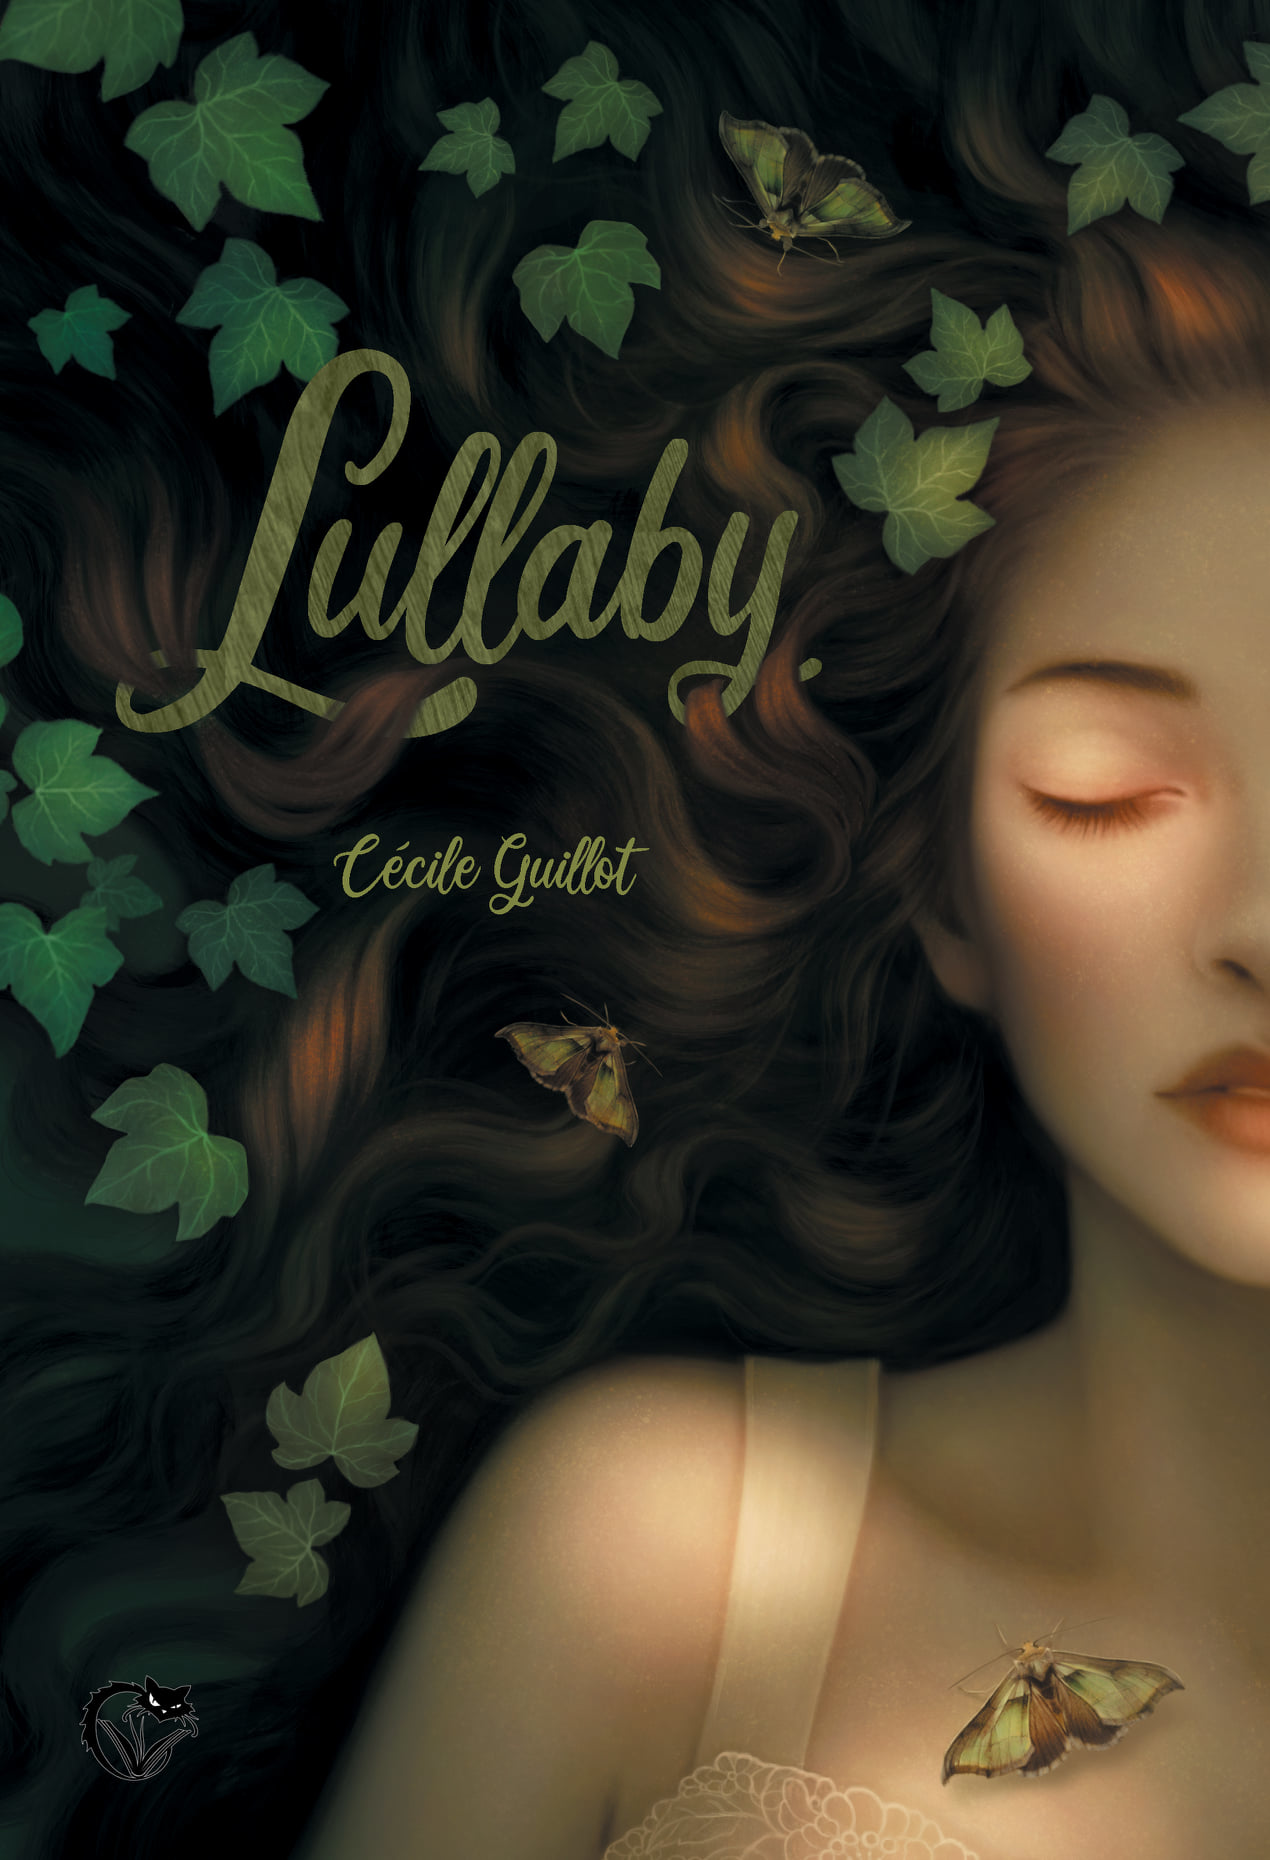 Afficher "Lullaby"